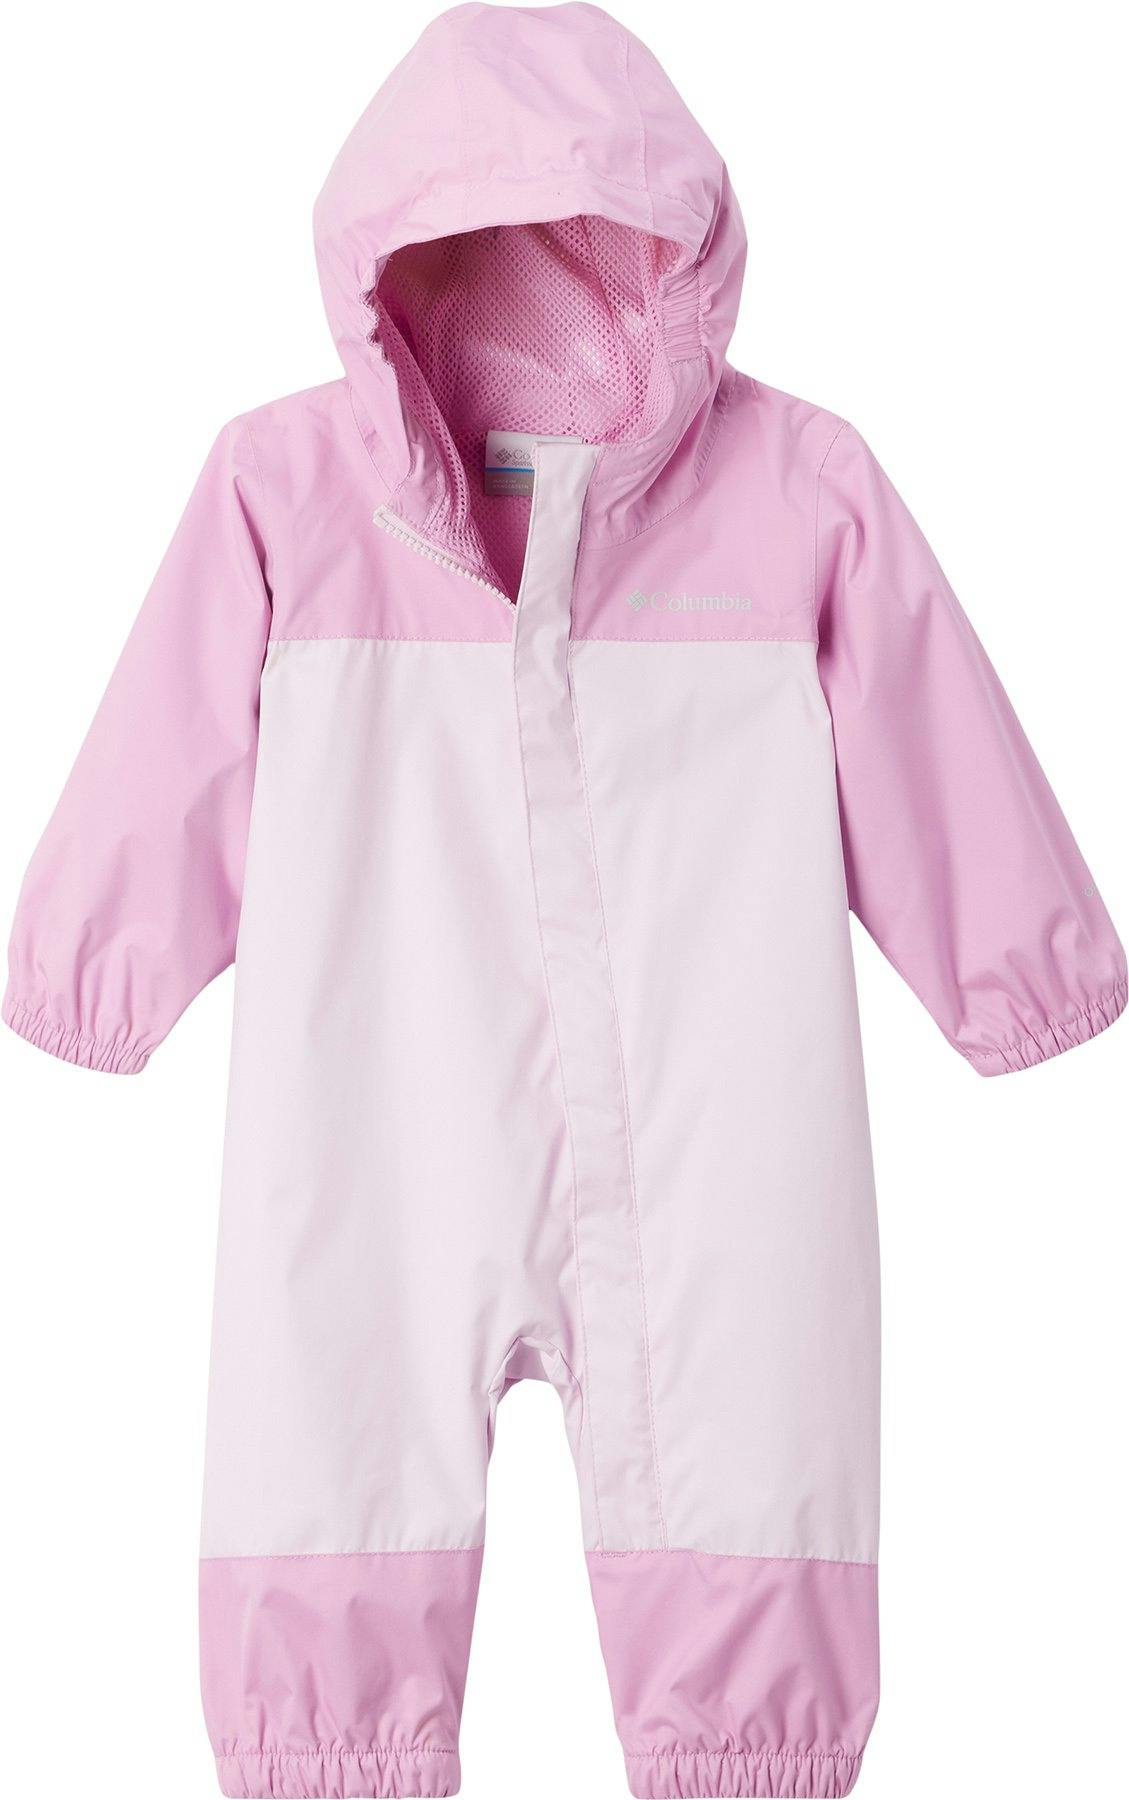 Product image for Critter Jumper Rain Suit - Infants